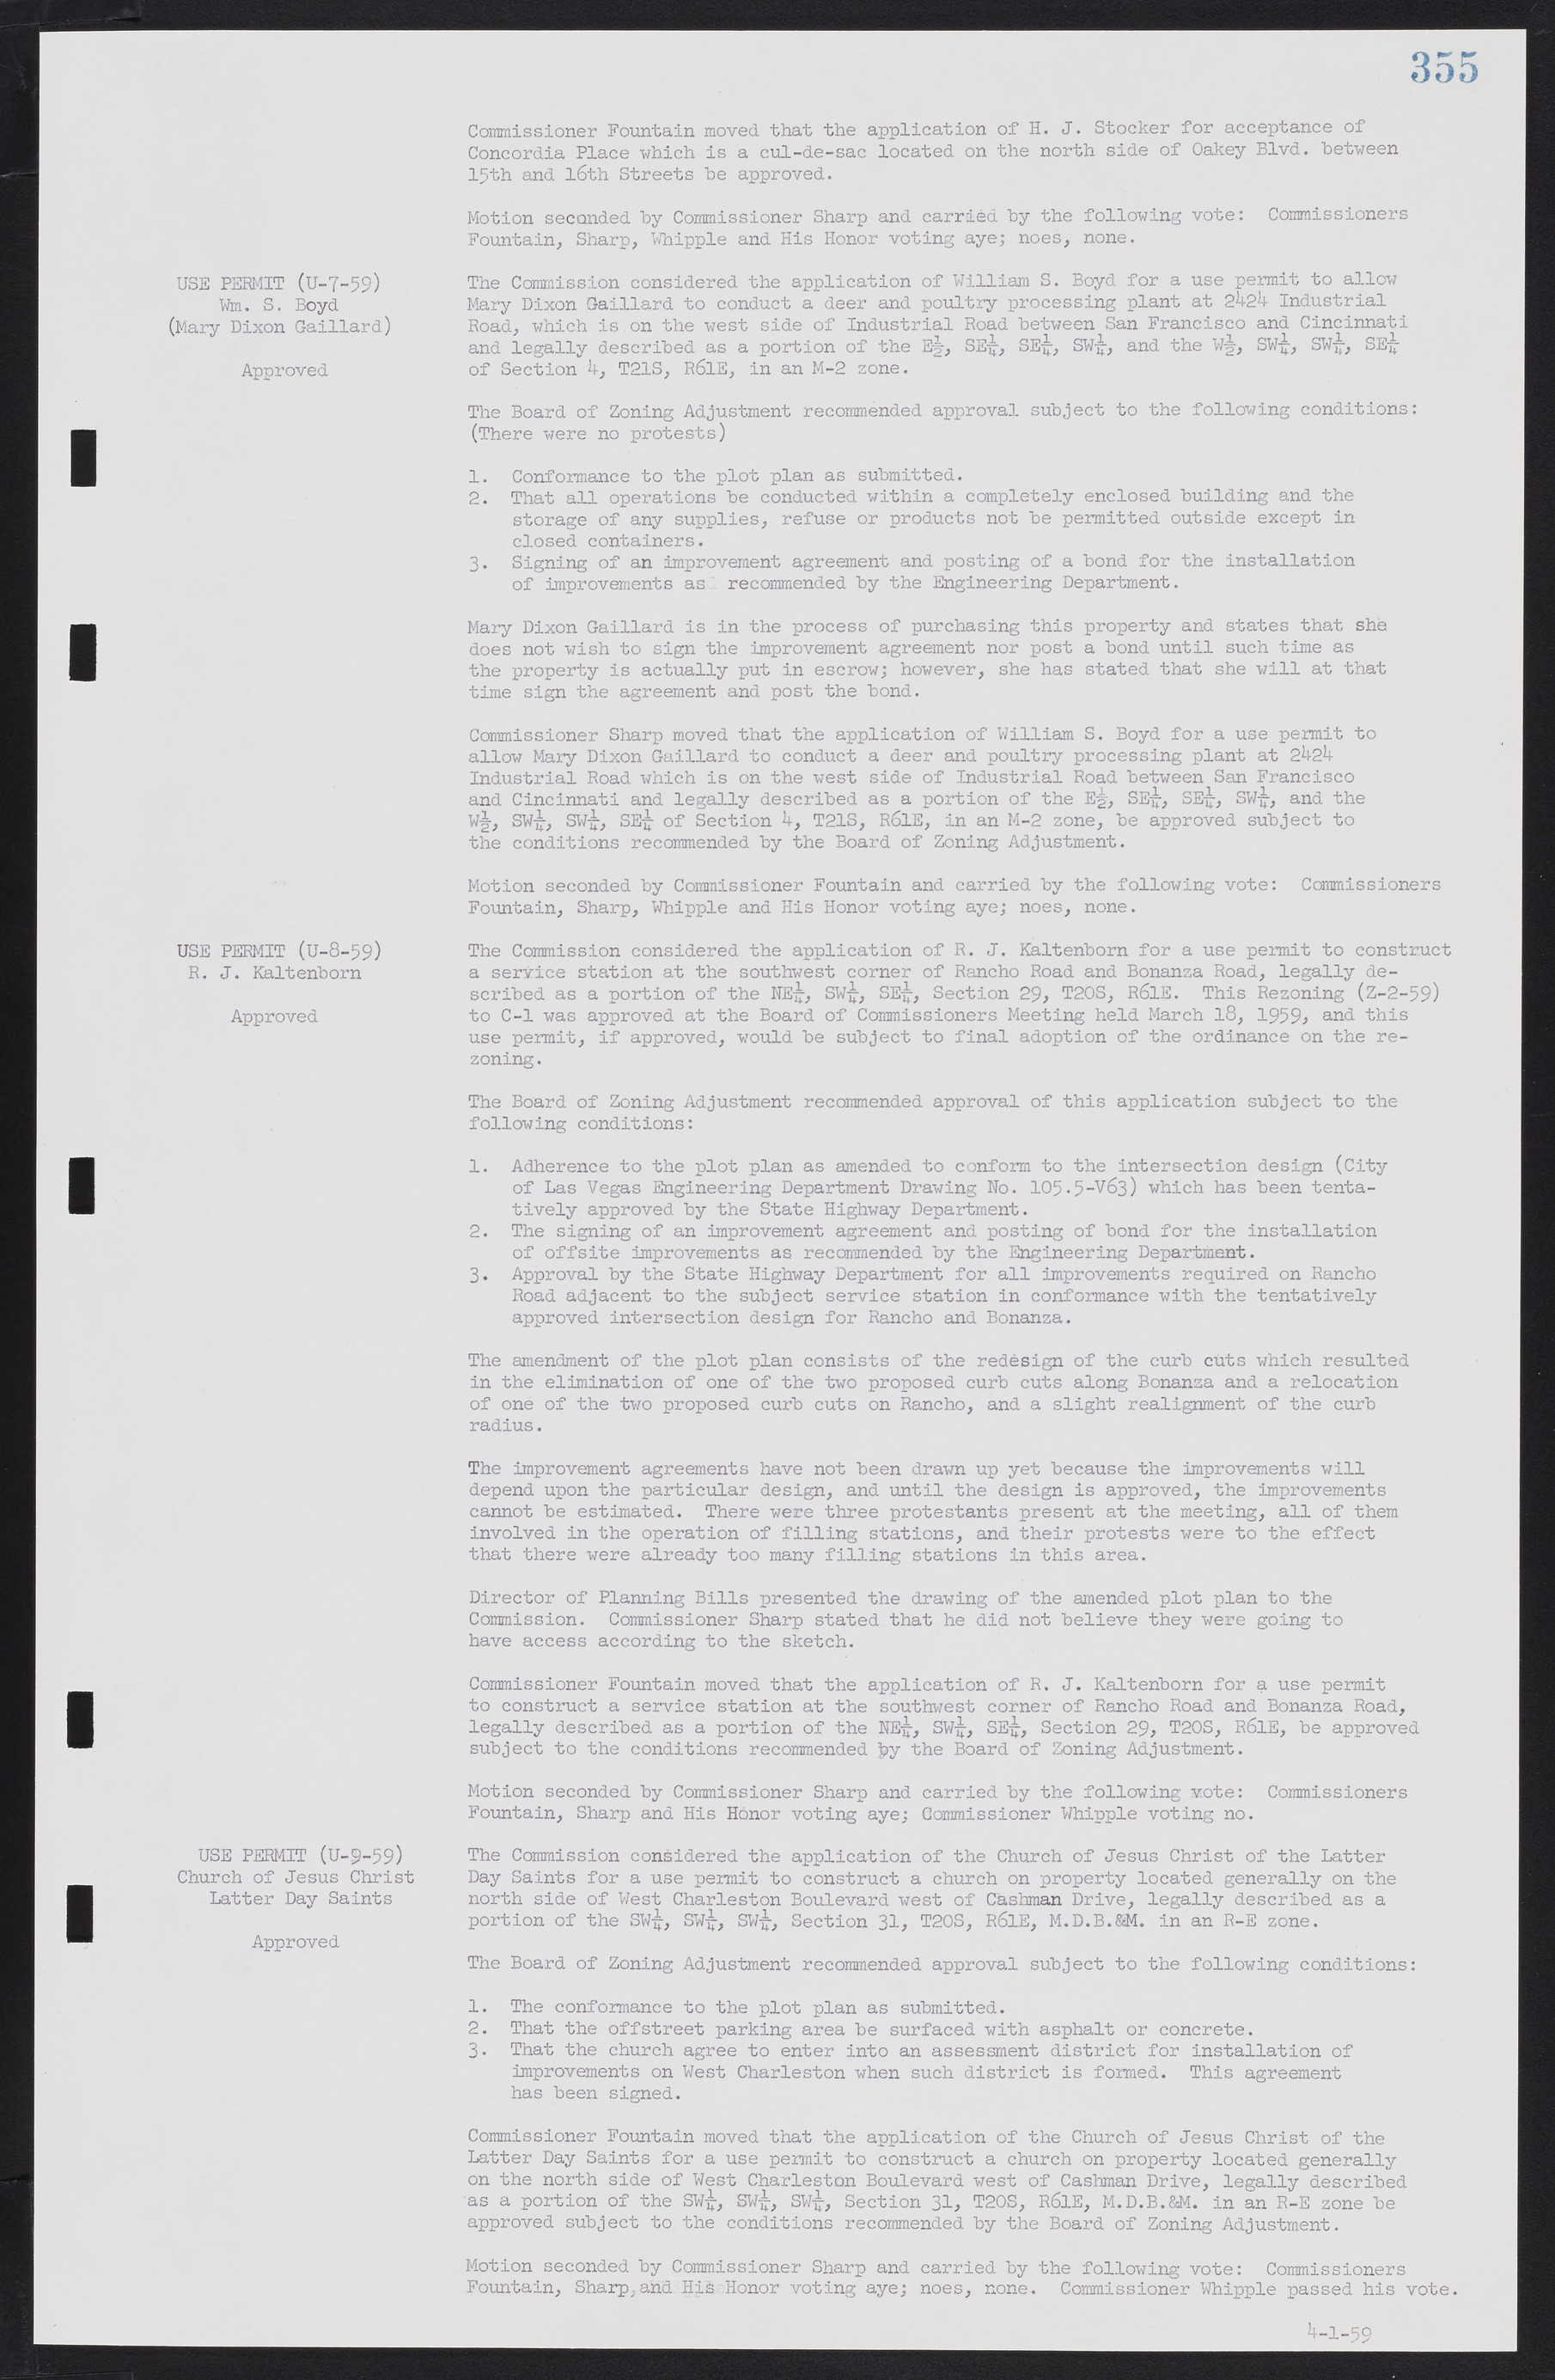 Las Vegas City Commission Minutes, November 20, 1957 to December 2, 1959, lvc000011-391